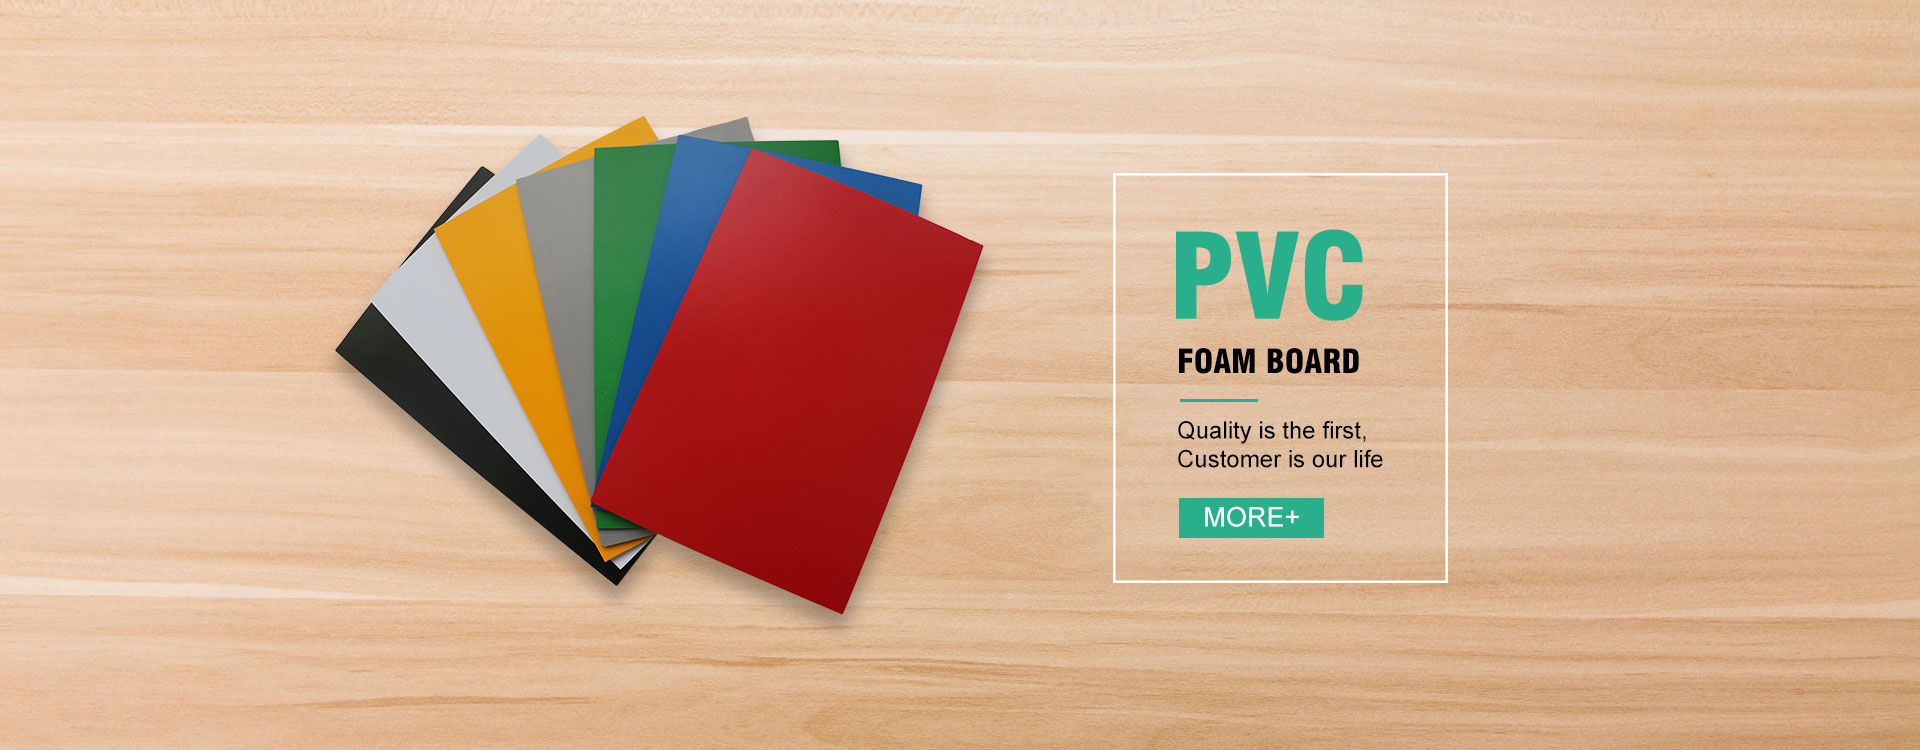 Bord Foam PVC